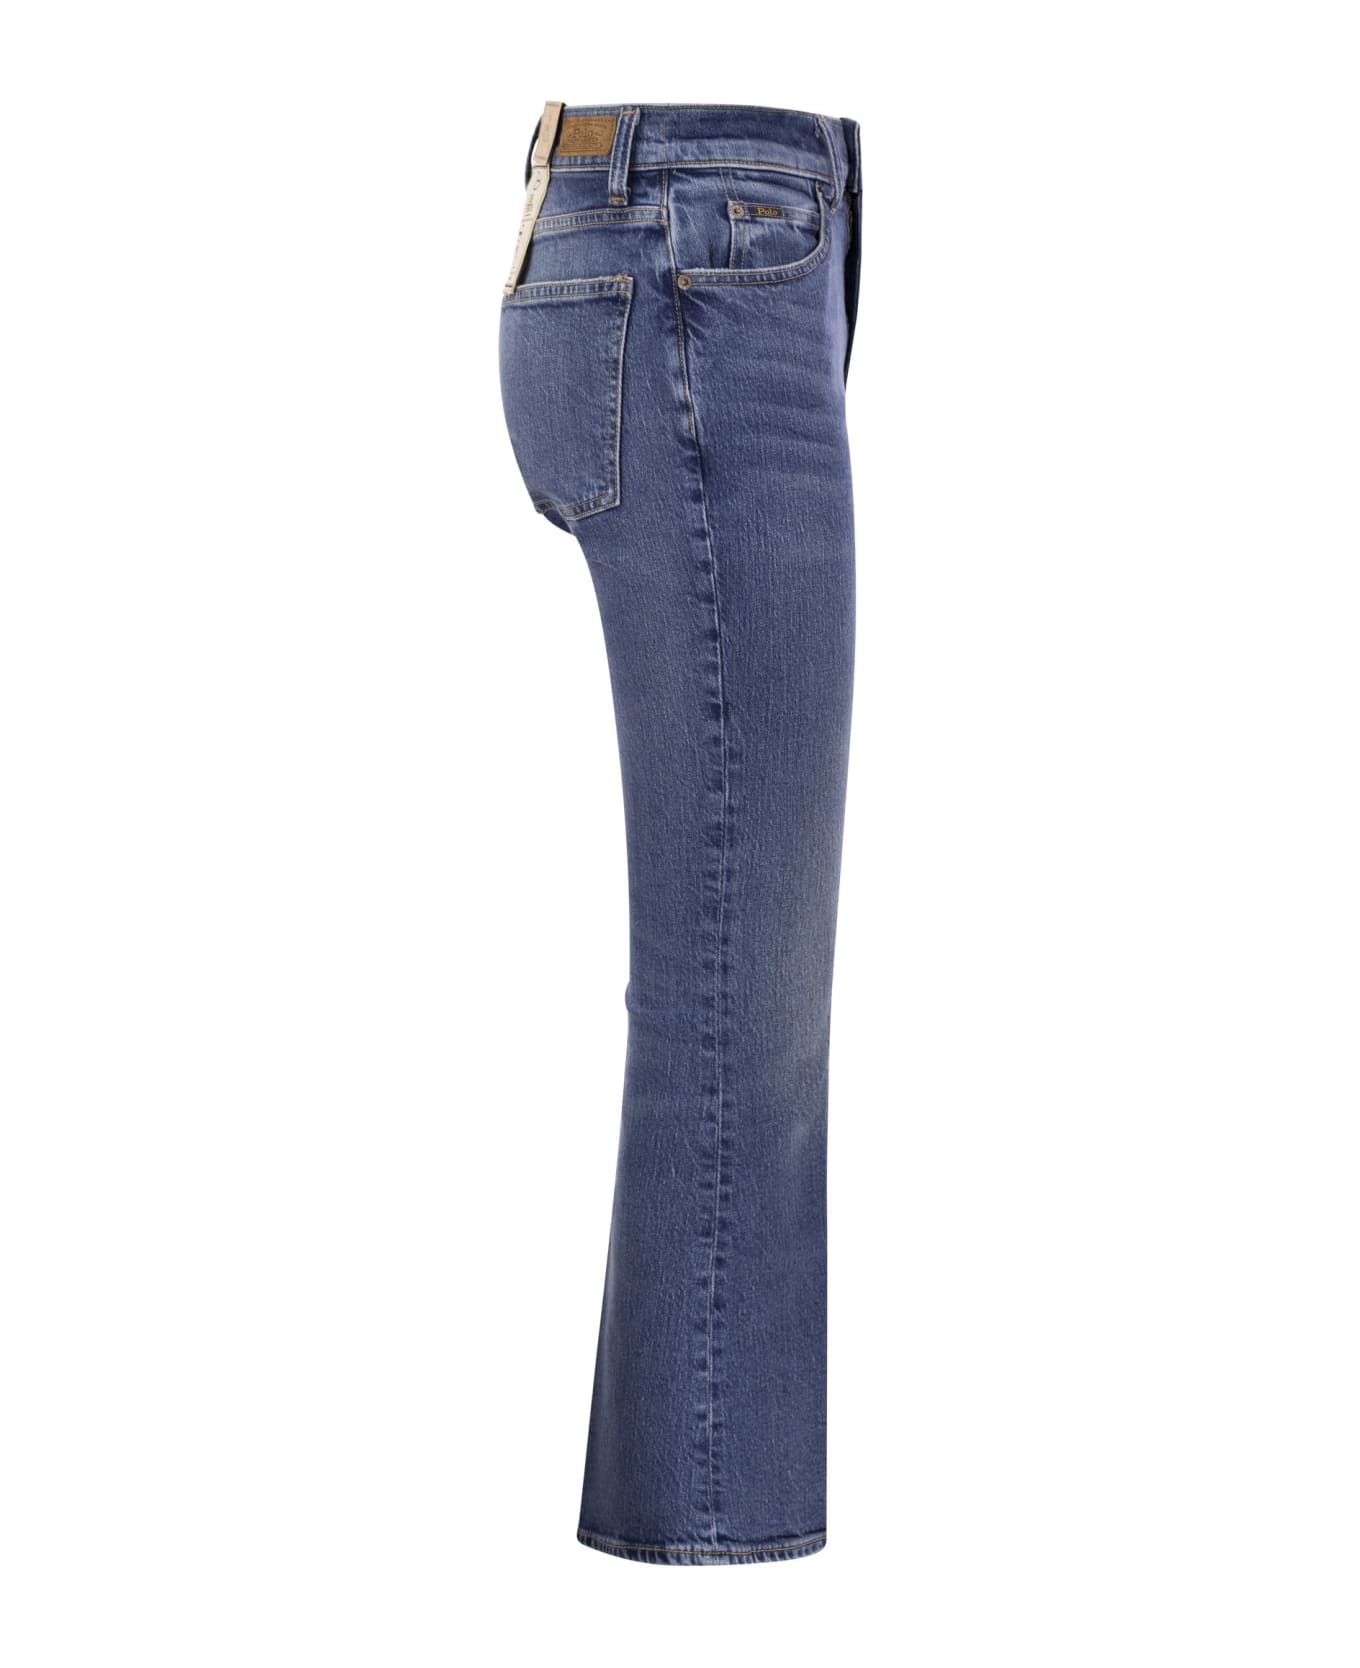 Polo Ralph Lauren Short And Flared Jeans - Medium Denim